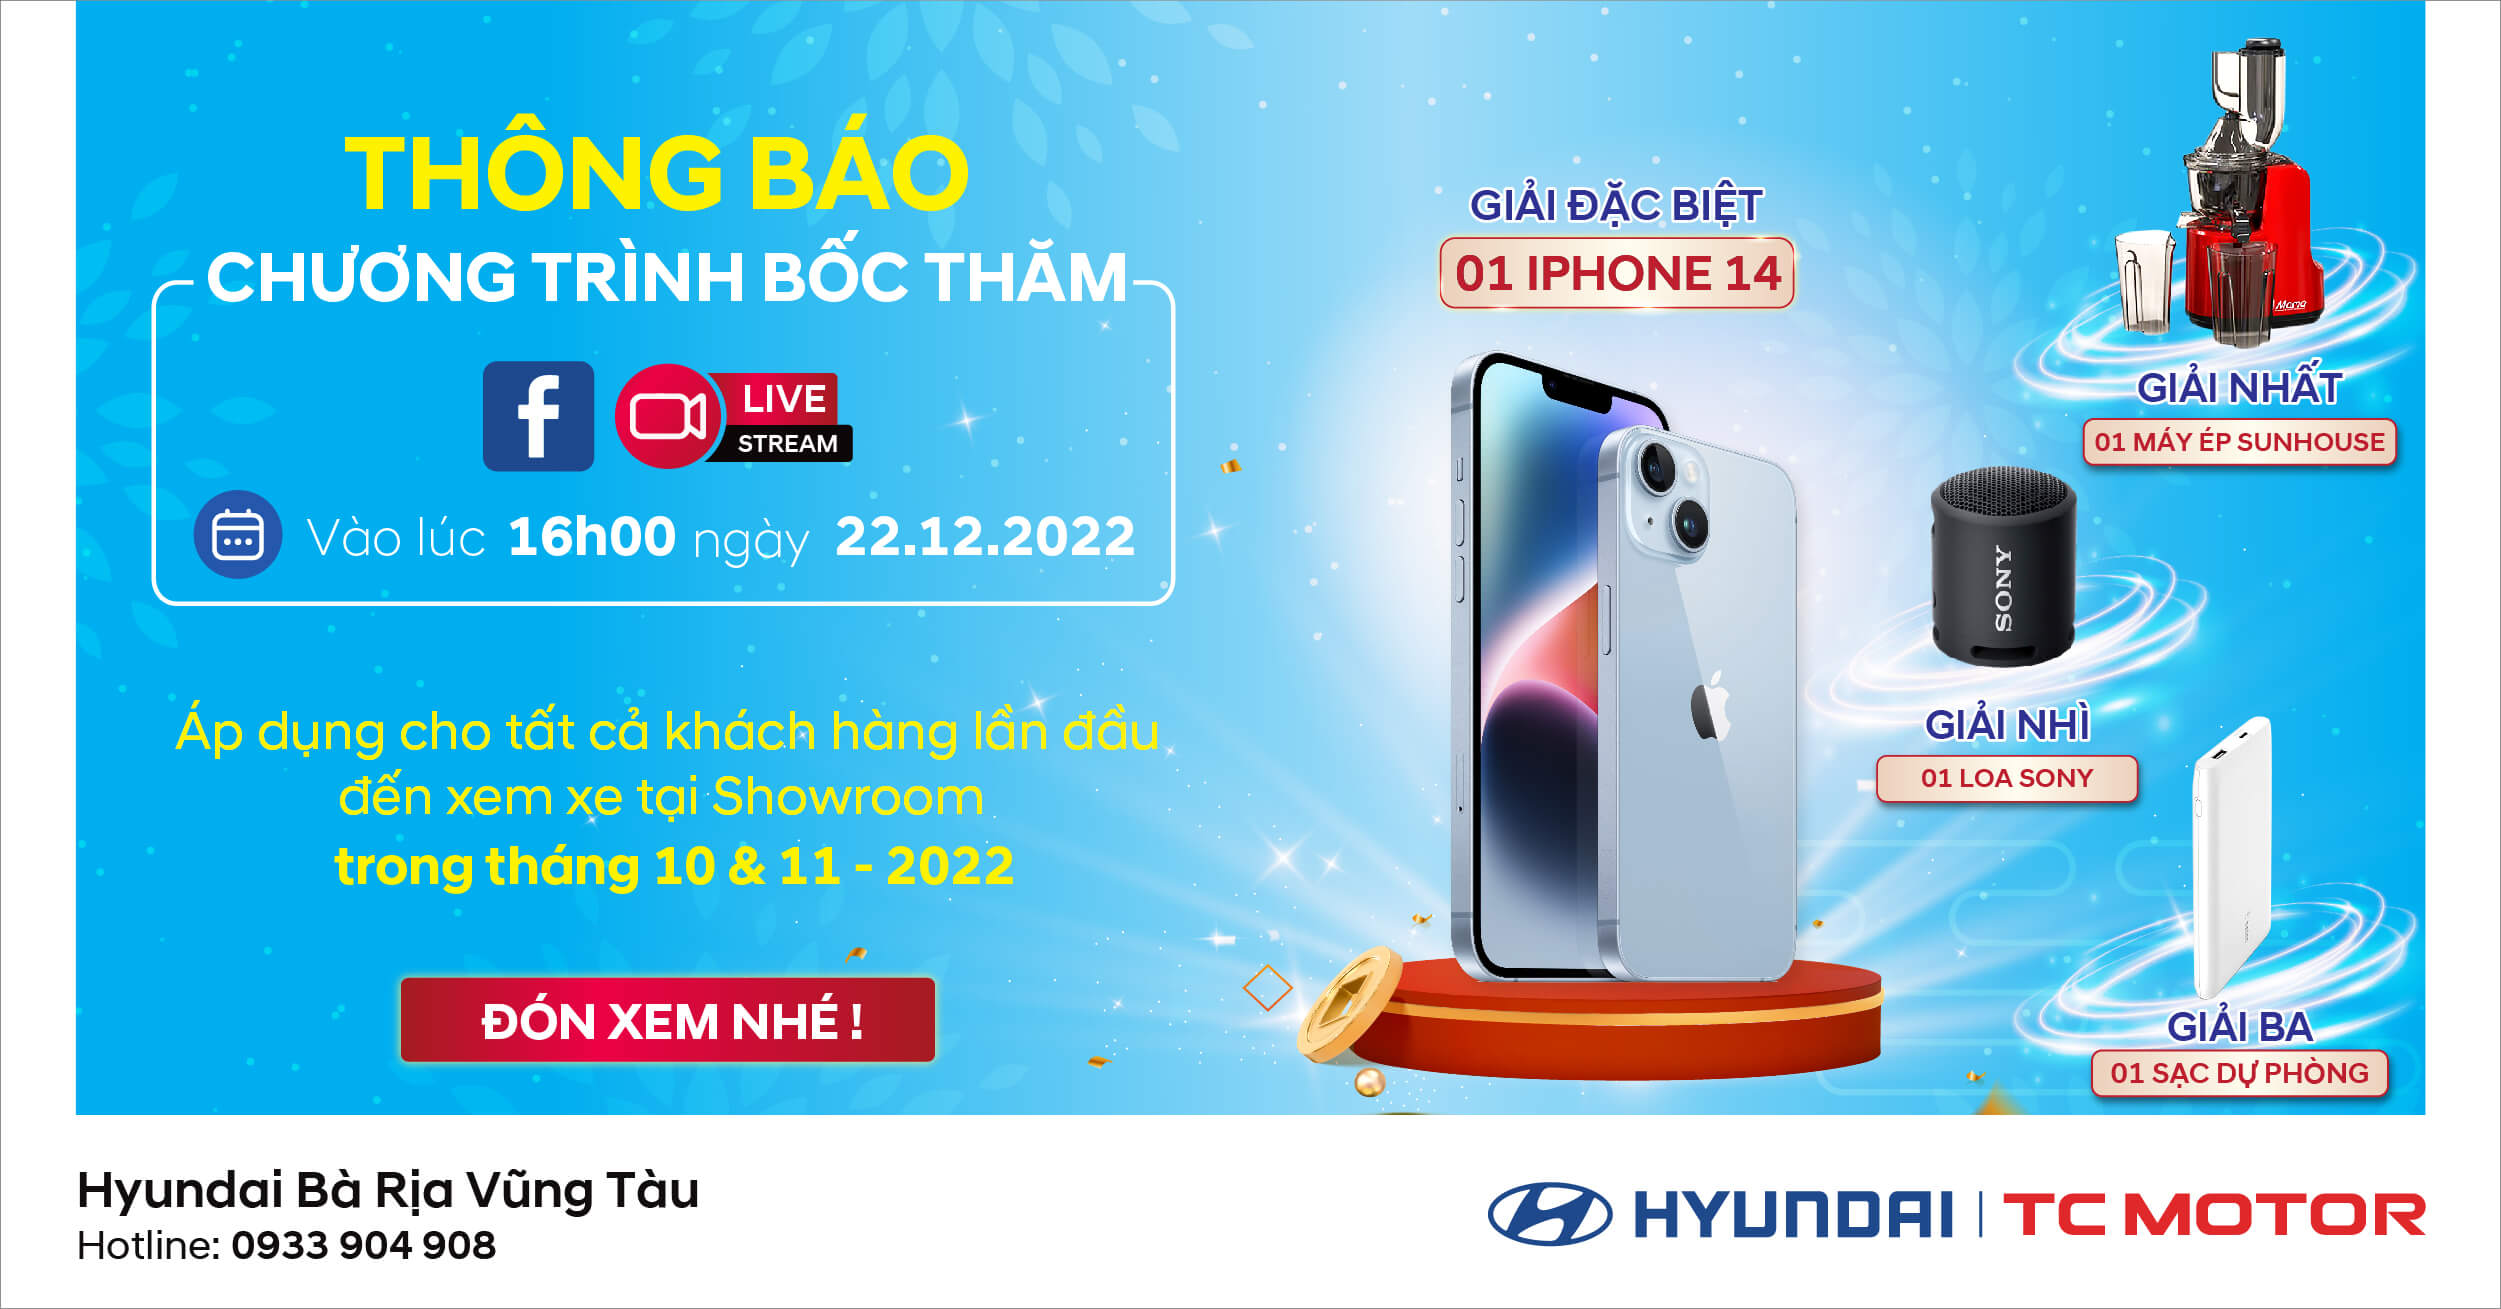 Thong bao Boc tham IP 14 Fb 1200x628 1